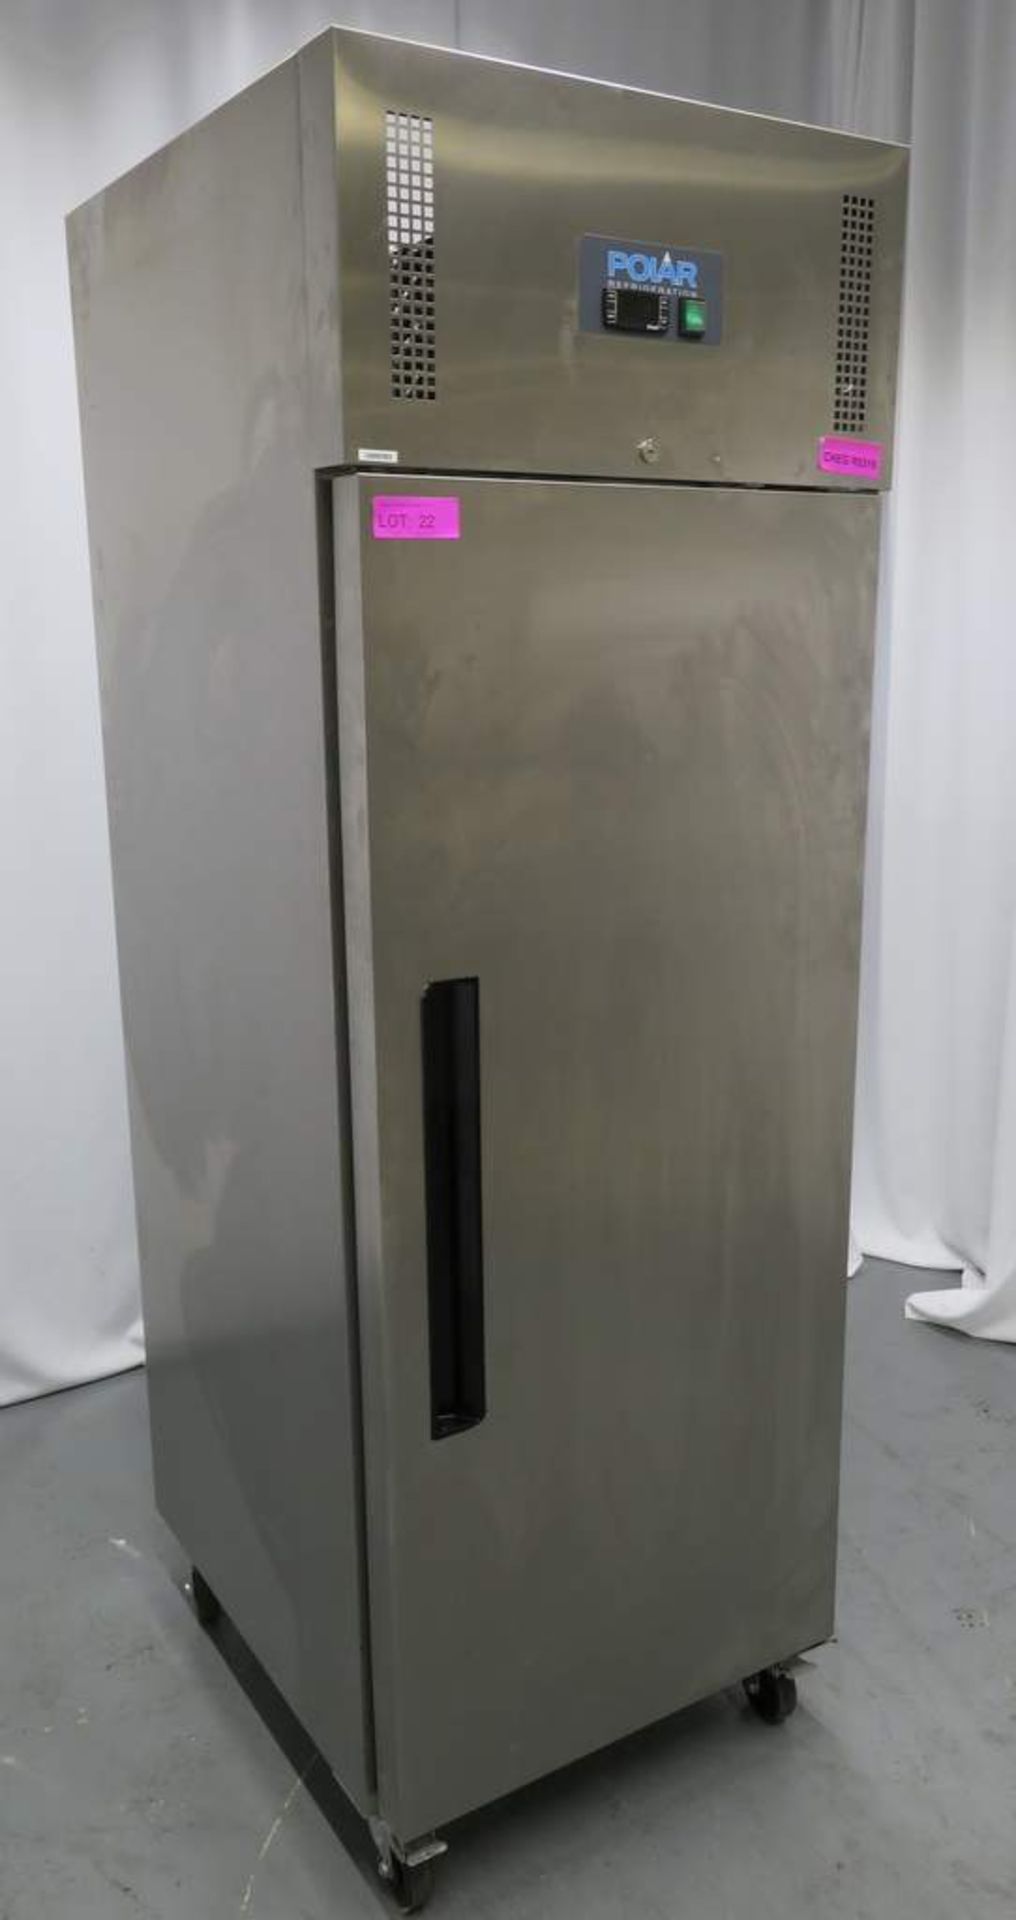 Polar G592 Upright Stainless Steel Refrigerator.